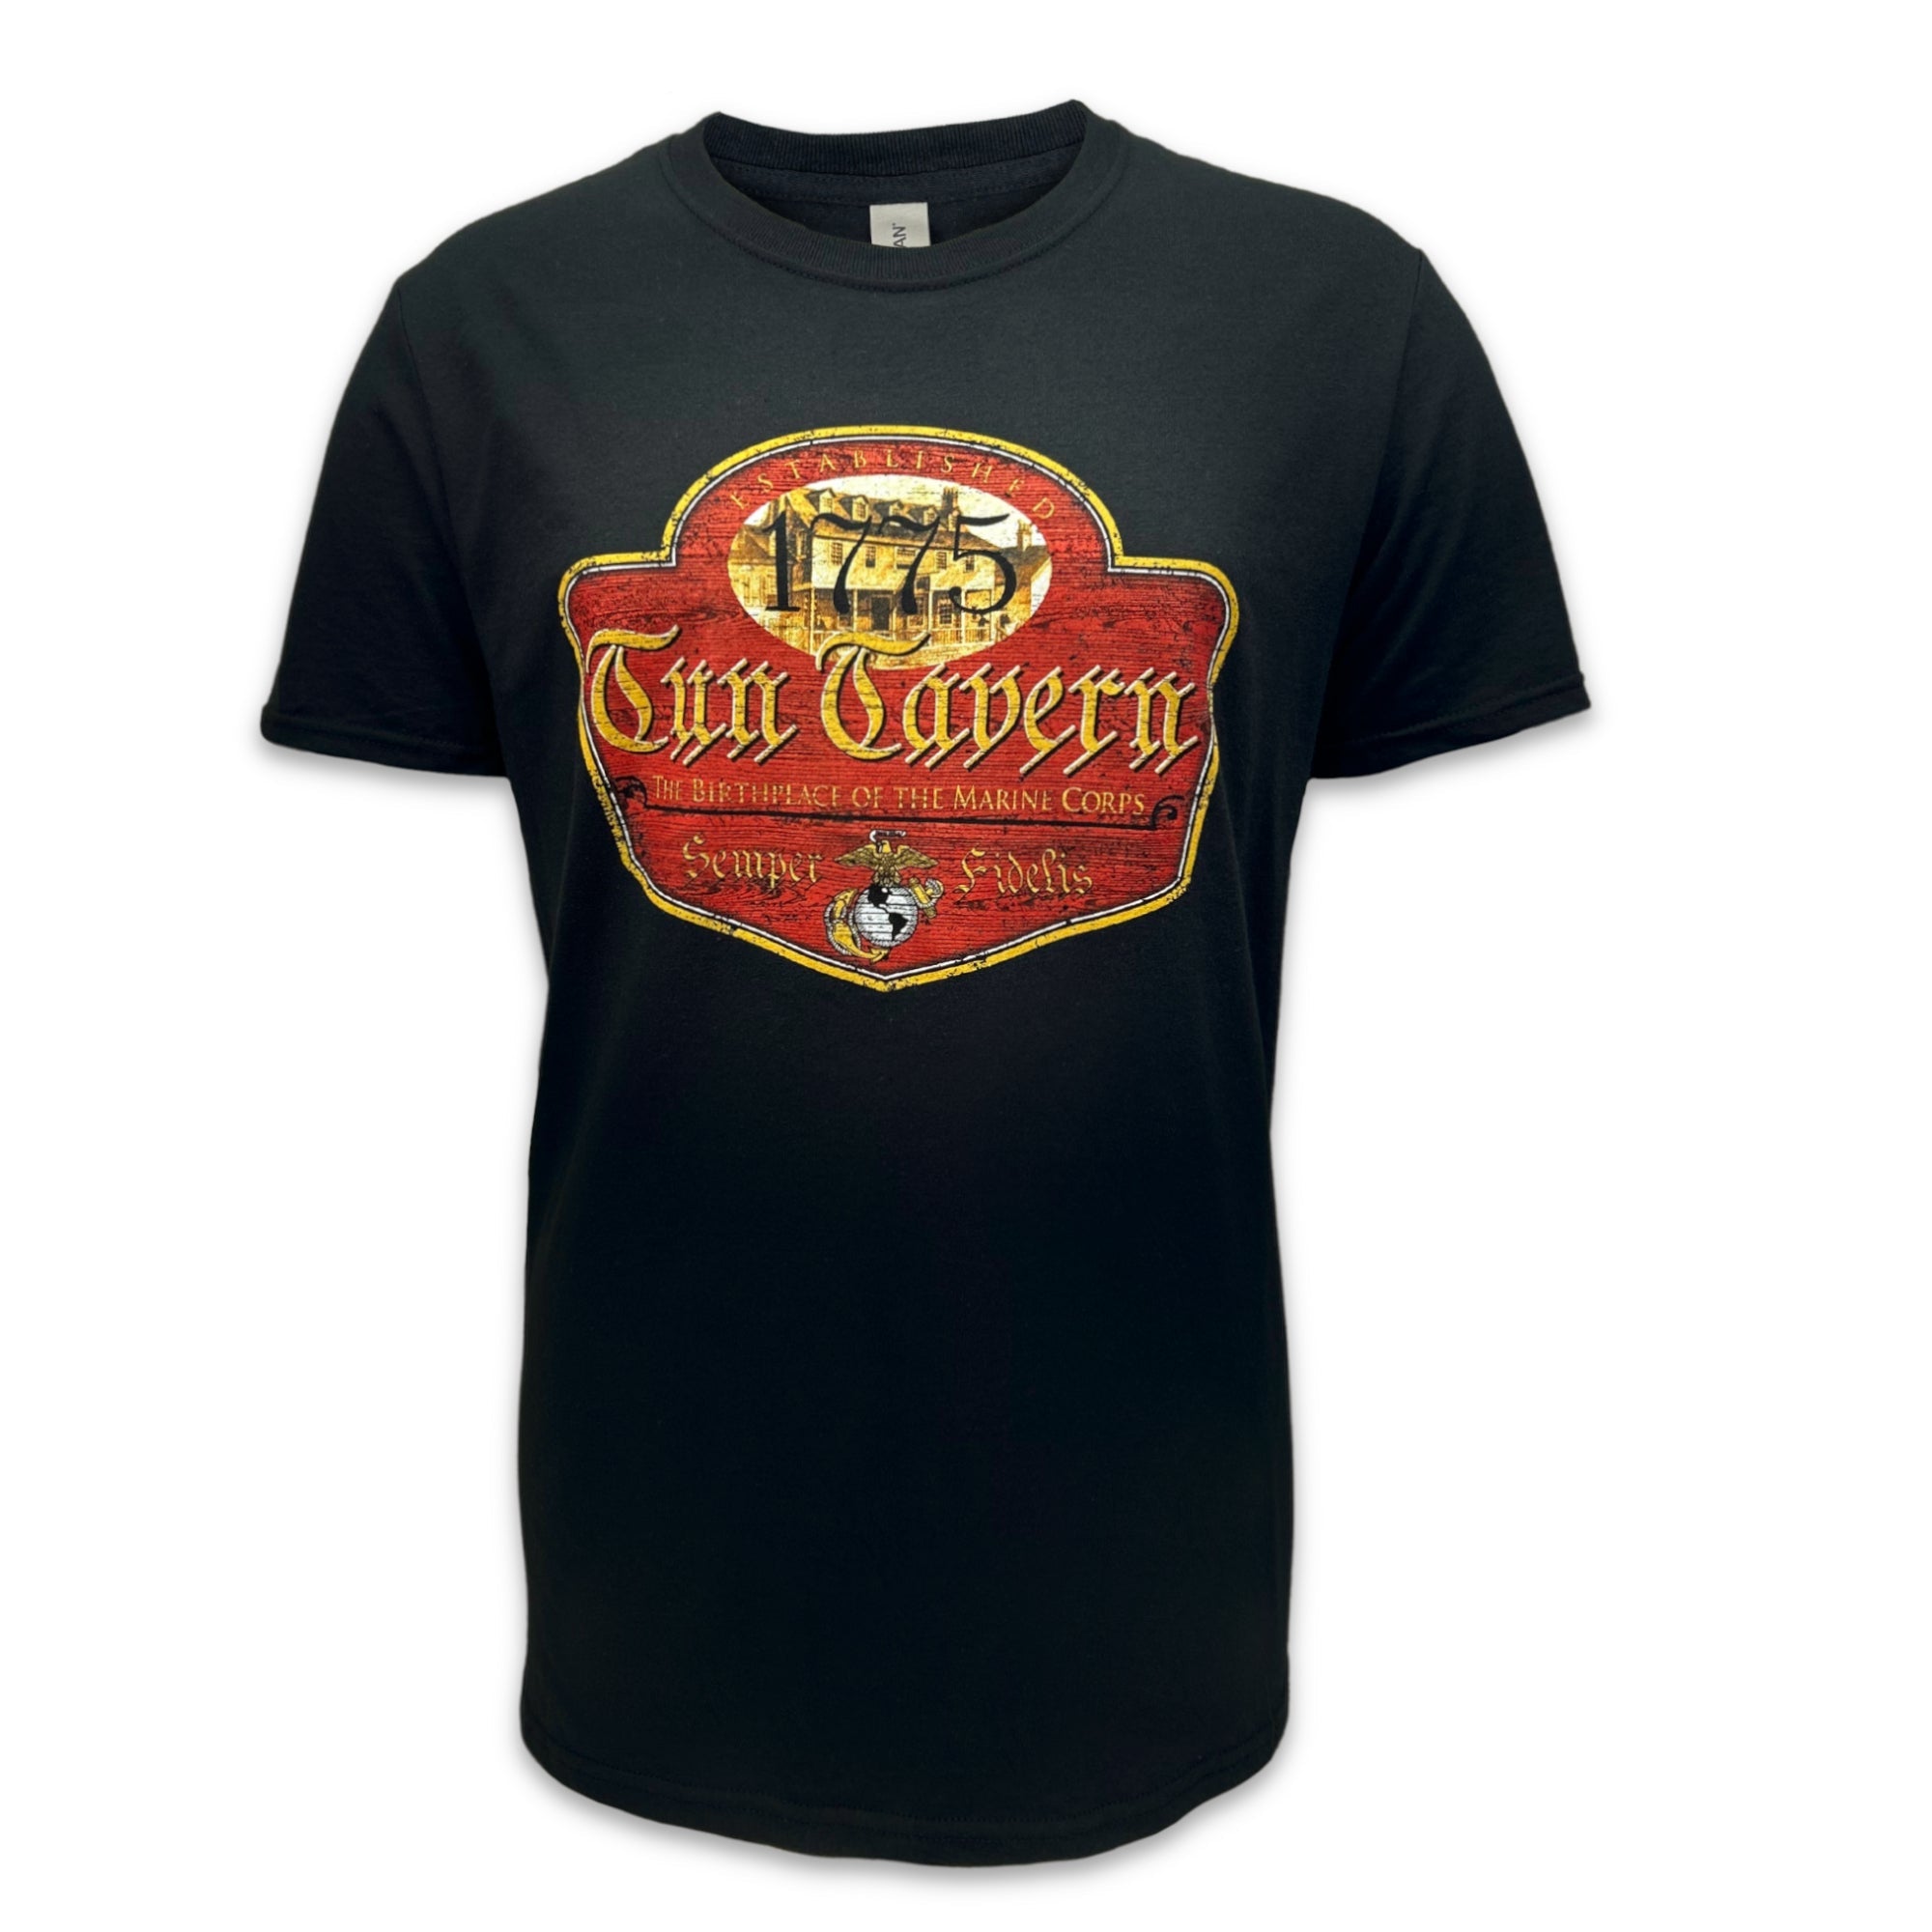 Tun Tavern T-Shirt (Black)